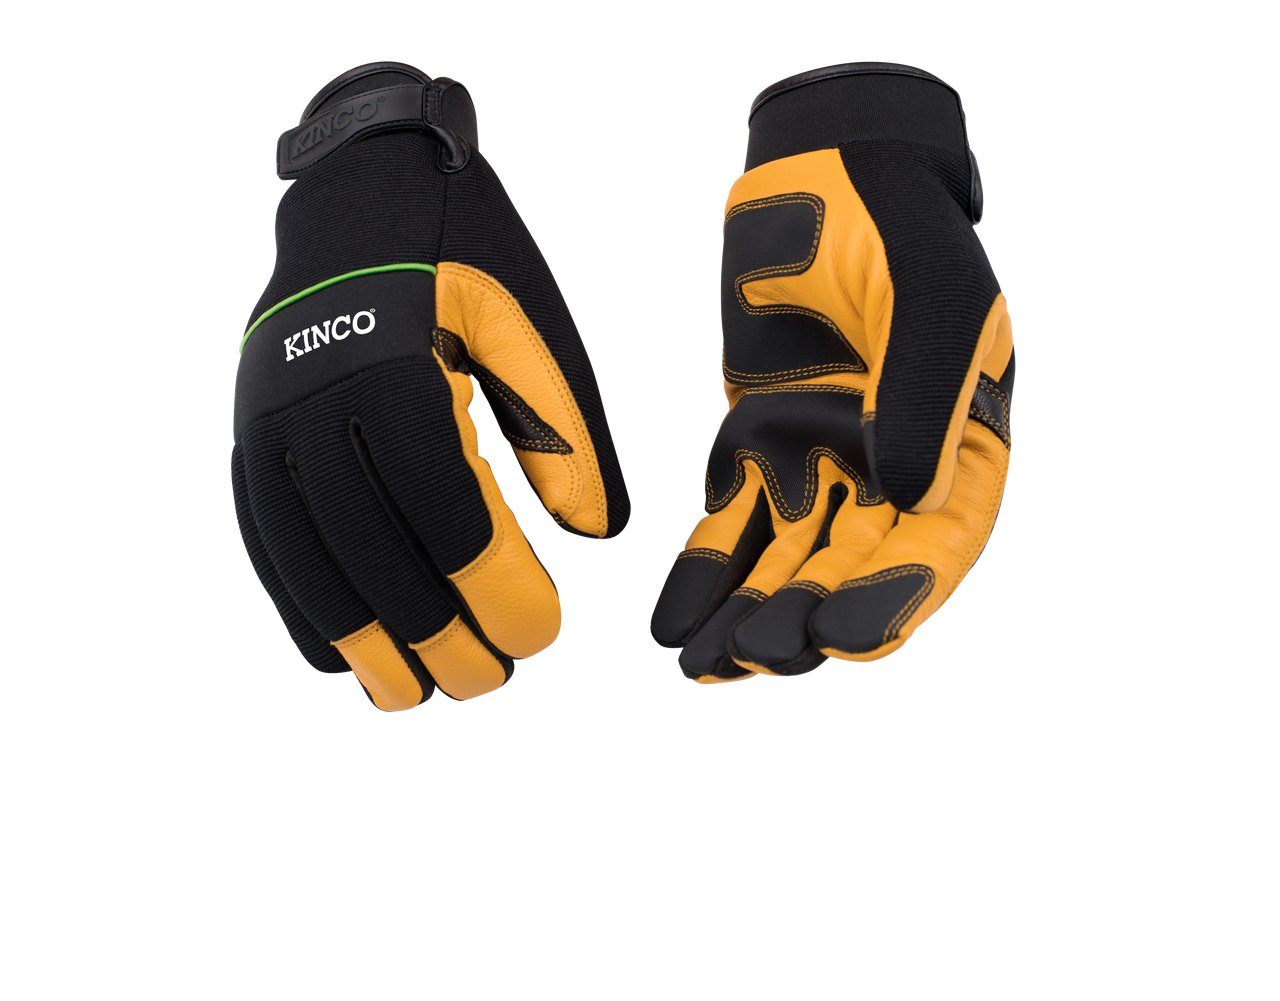 Cut Resistant Gloves, Utility Work Gloves for Men & Women, PU